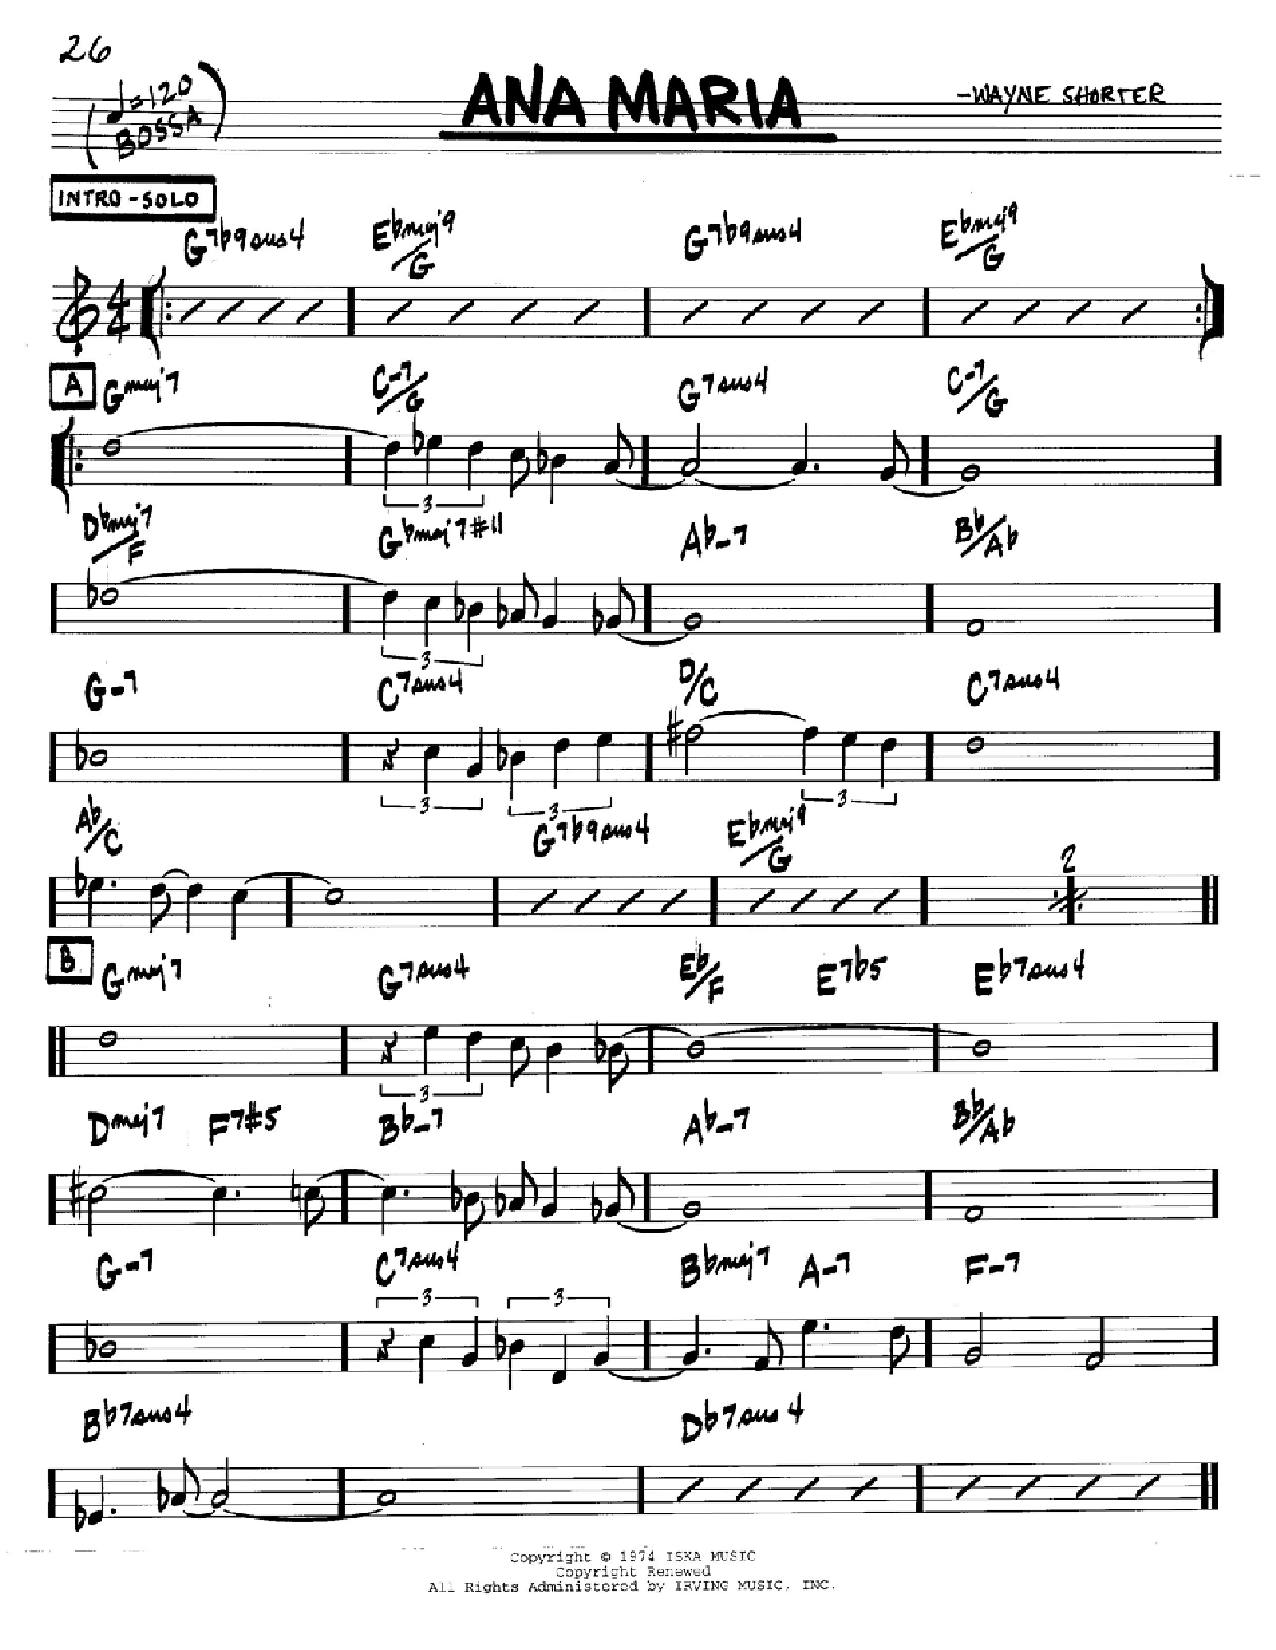 Wayne Shorter Ana Maria Sheet Music Notes & Chords for Soprano Sax Transcription - Download or Print PDF